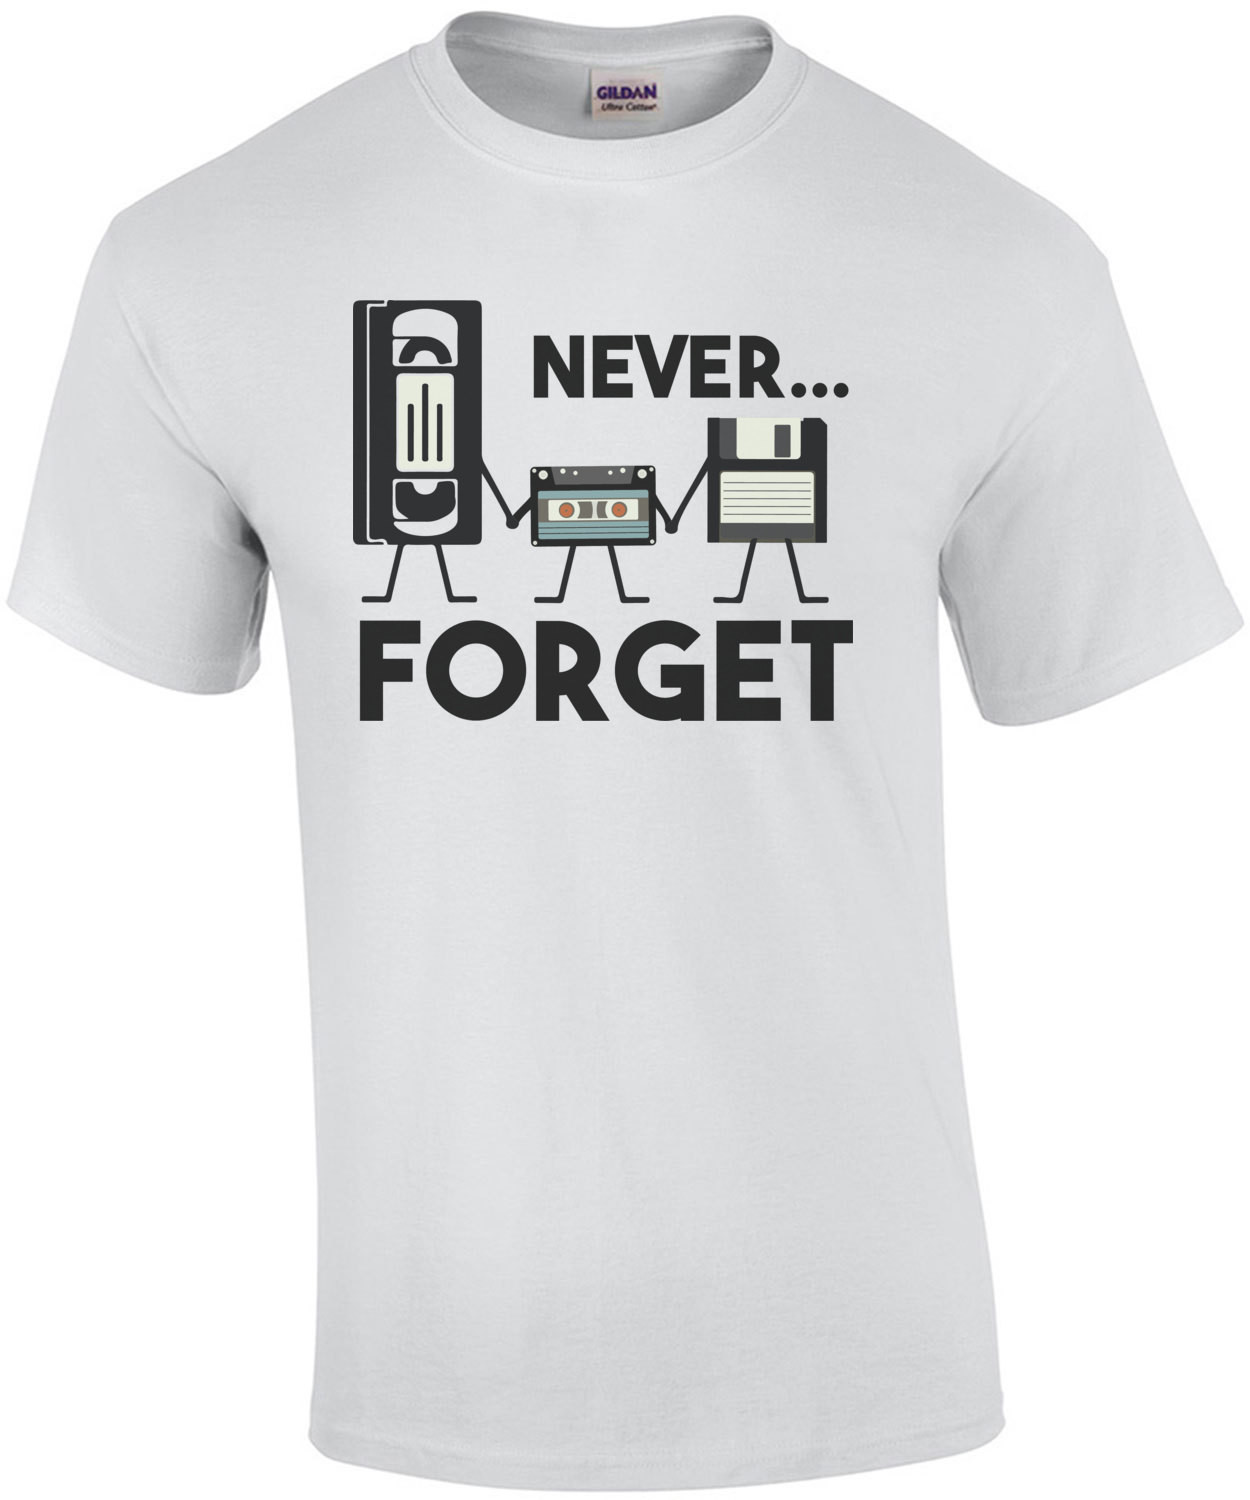 Never Forget - VHS Tape, Floppy Disk, Tape, Funny Nostalgia T-Shirt